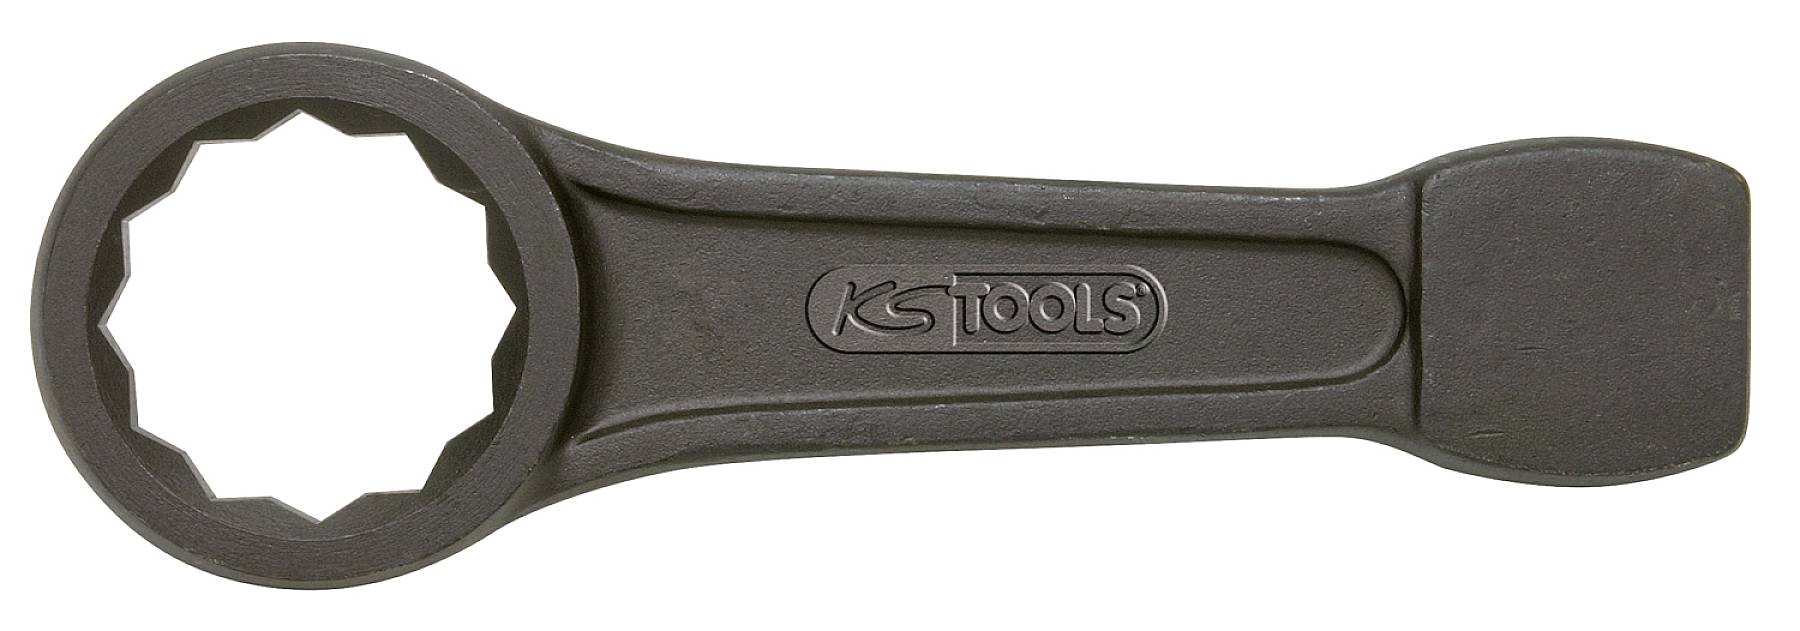 KS TOOLS Werkzeuge-Maschinen GmbH Schlag-Ringschlüssel, 5.3/8 (517.2997)